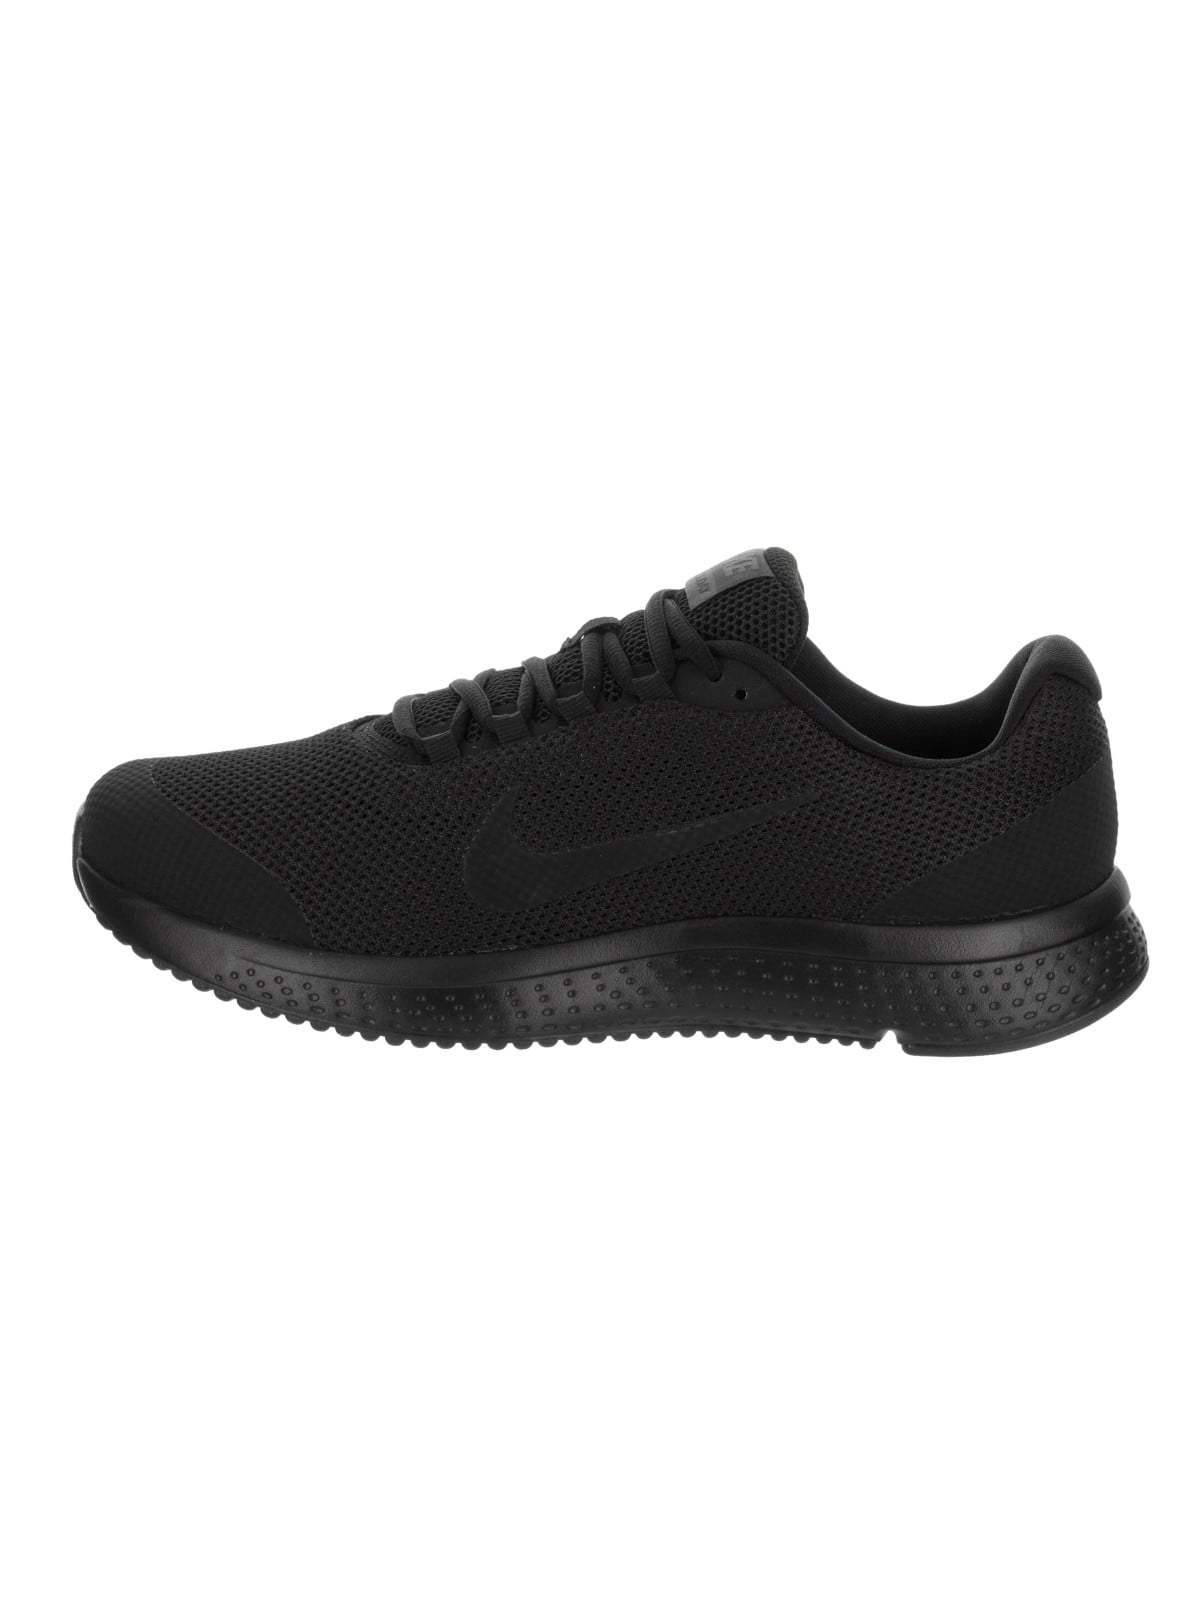 Nike RunAllDay Black/Black/Anthracite Men's Running Shoes - (9 D(M) US) -